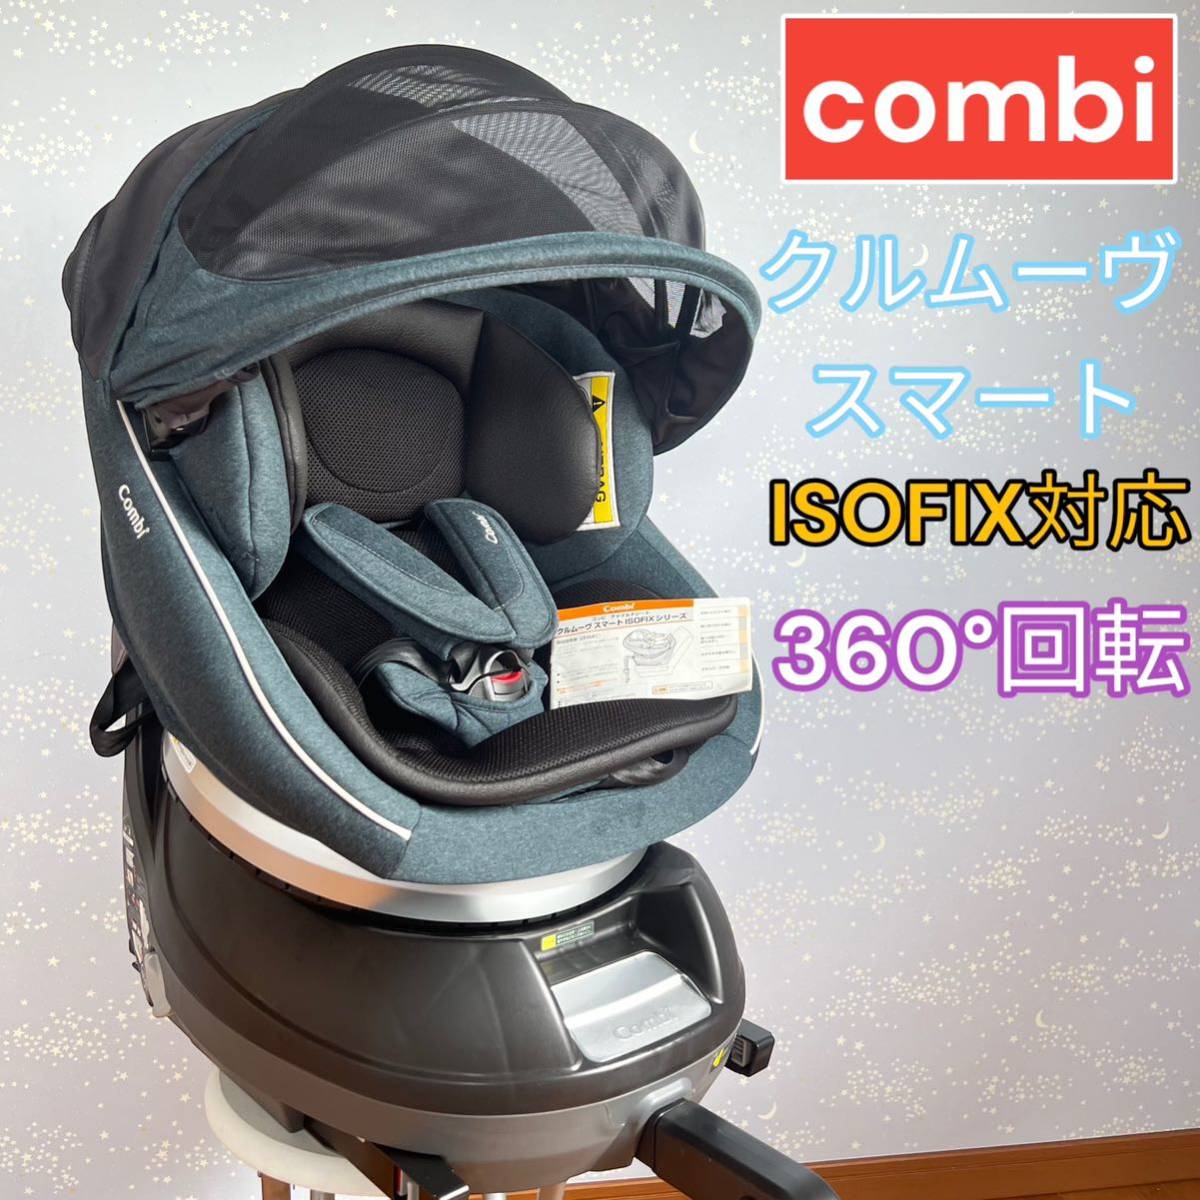 COMBI クルムーブスマート ISOFIX エッグショック CG-UIG-